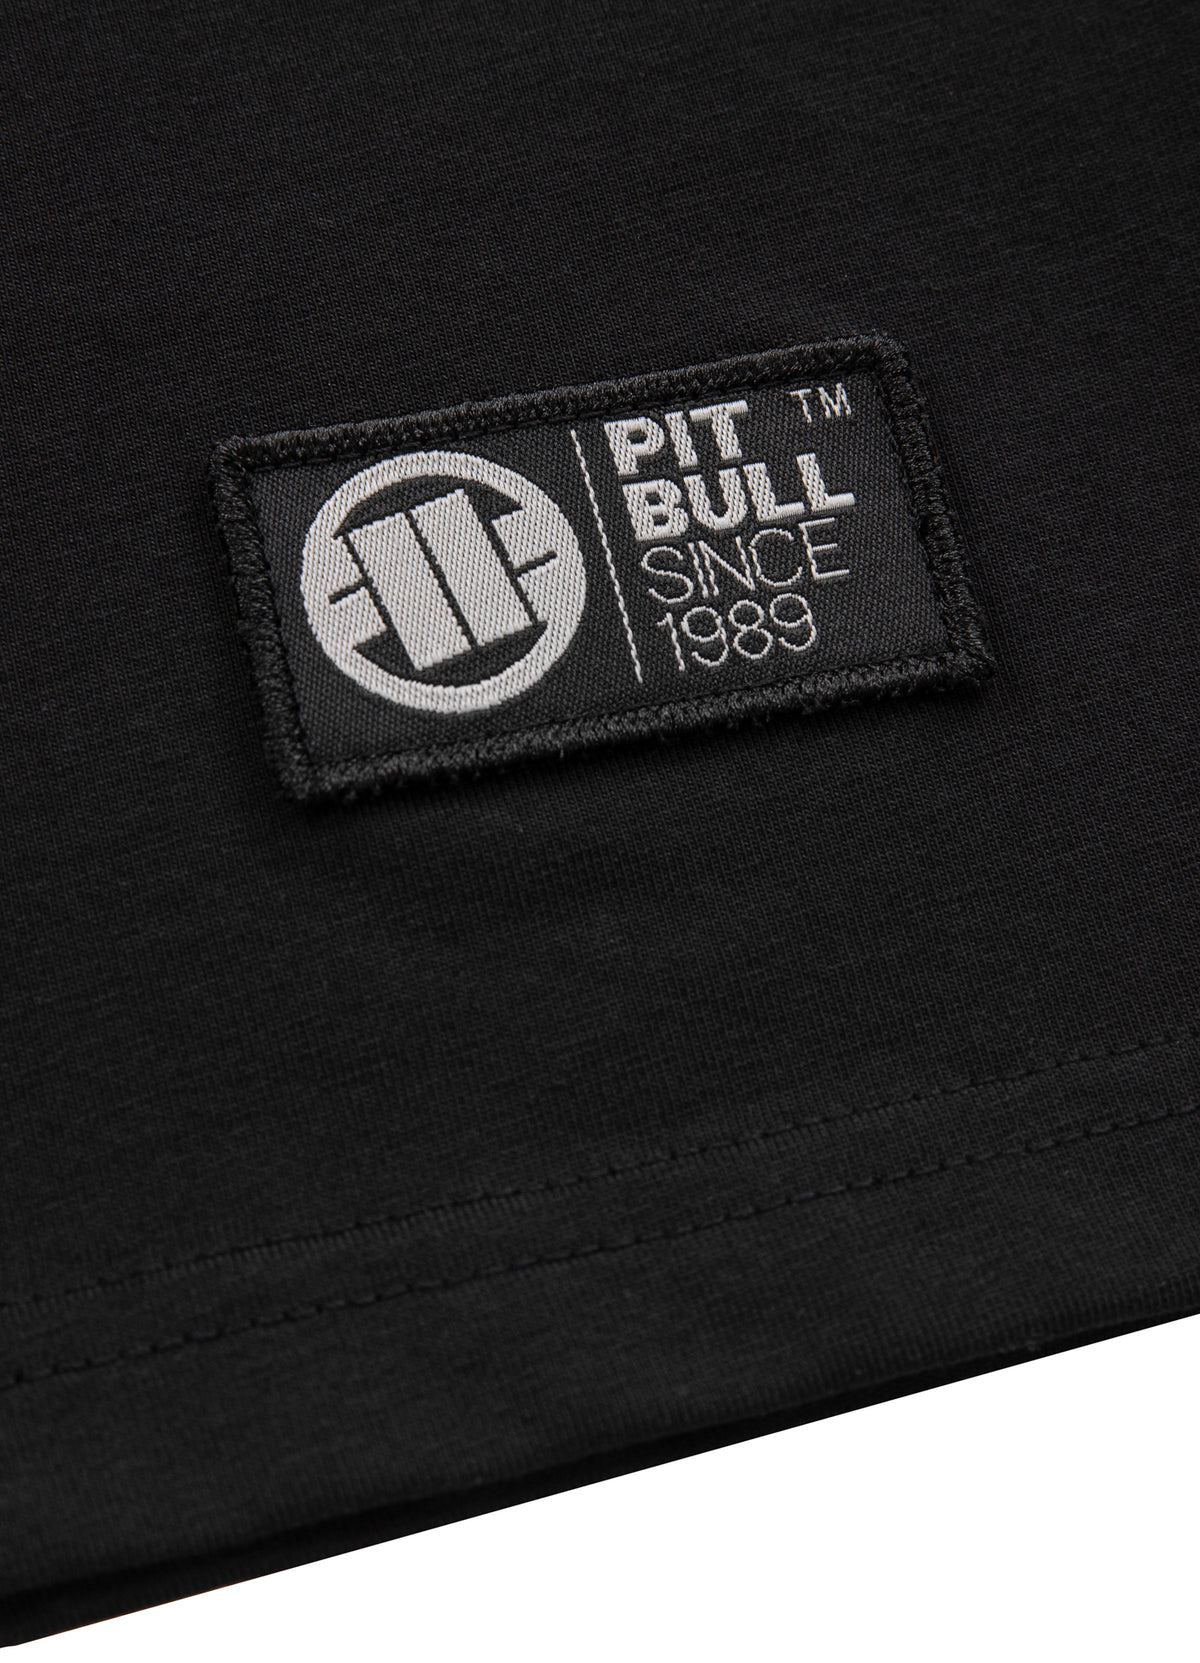 NO LOGO 190 Black T-shirt - Pitbullstore.eu